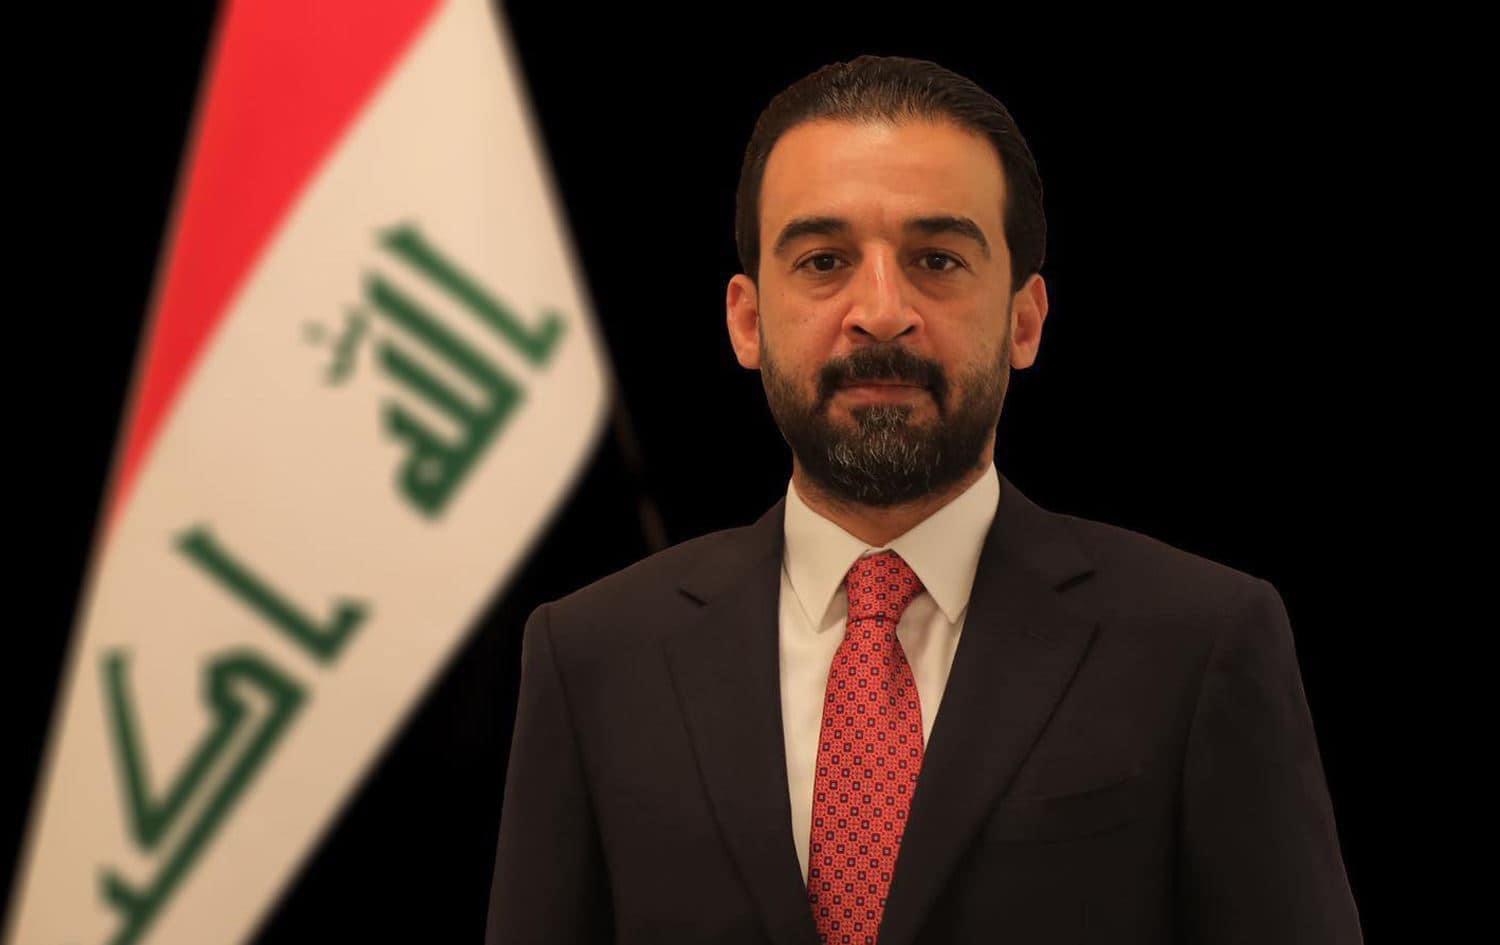 Al-Halboosi says he will take legal action to reverse his "strange" dismissal